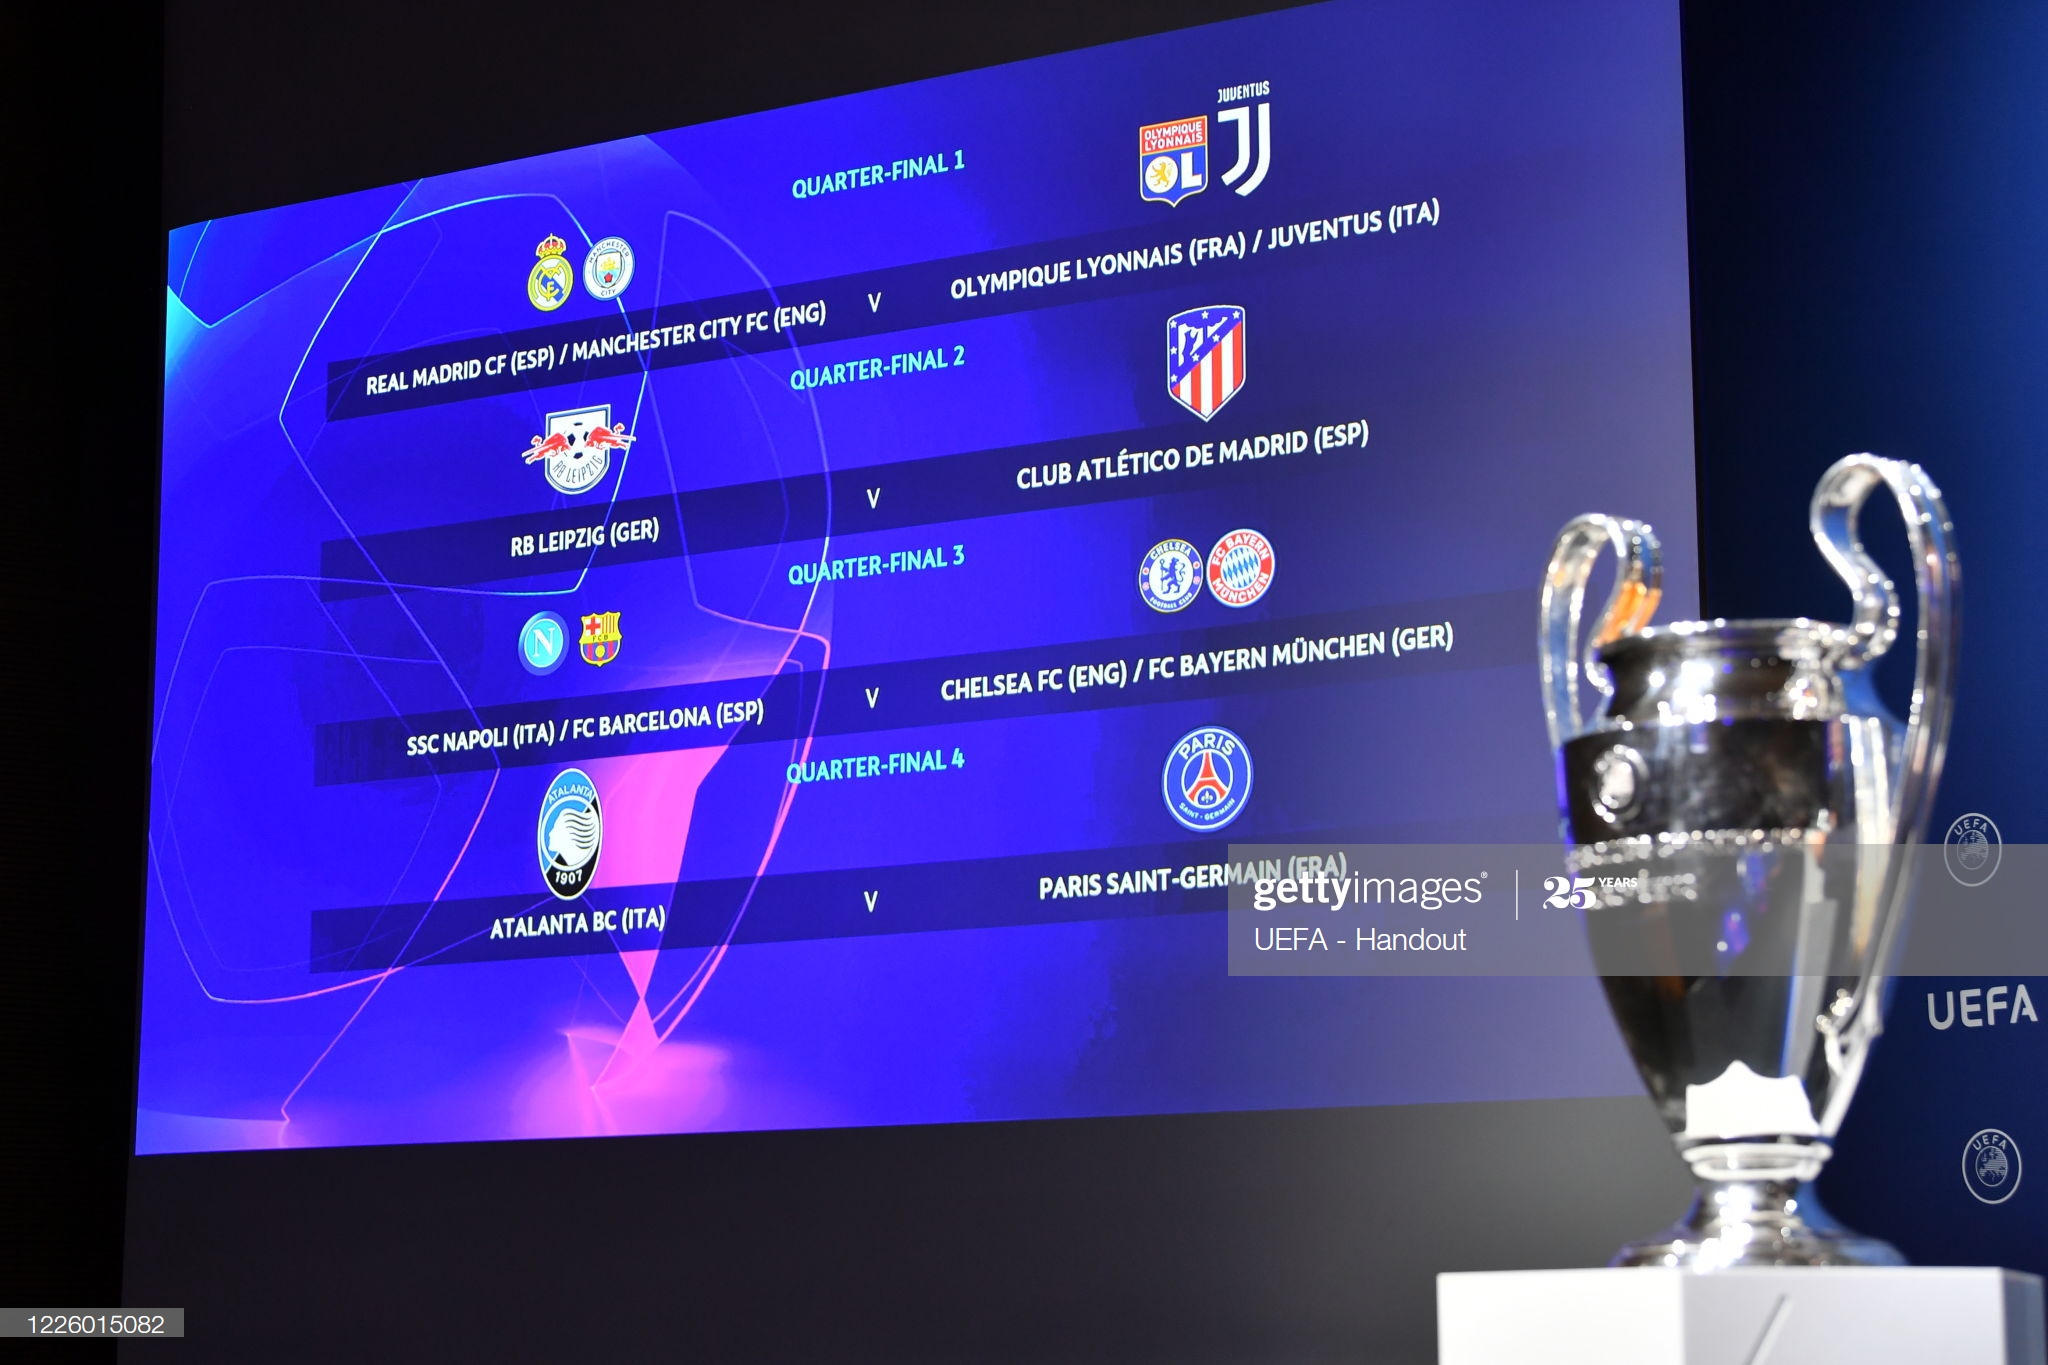 Predicting The UEFA Champions League 